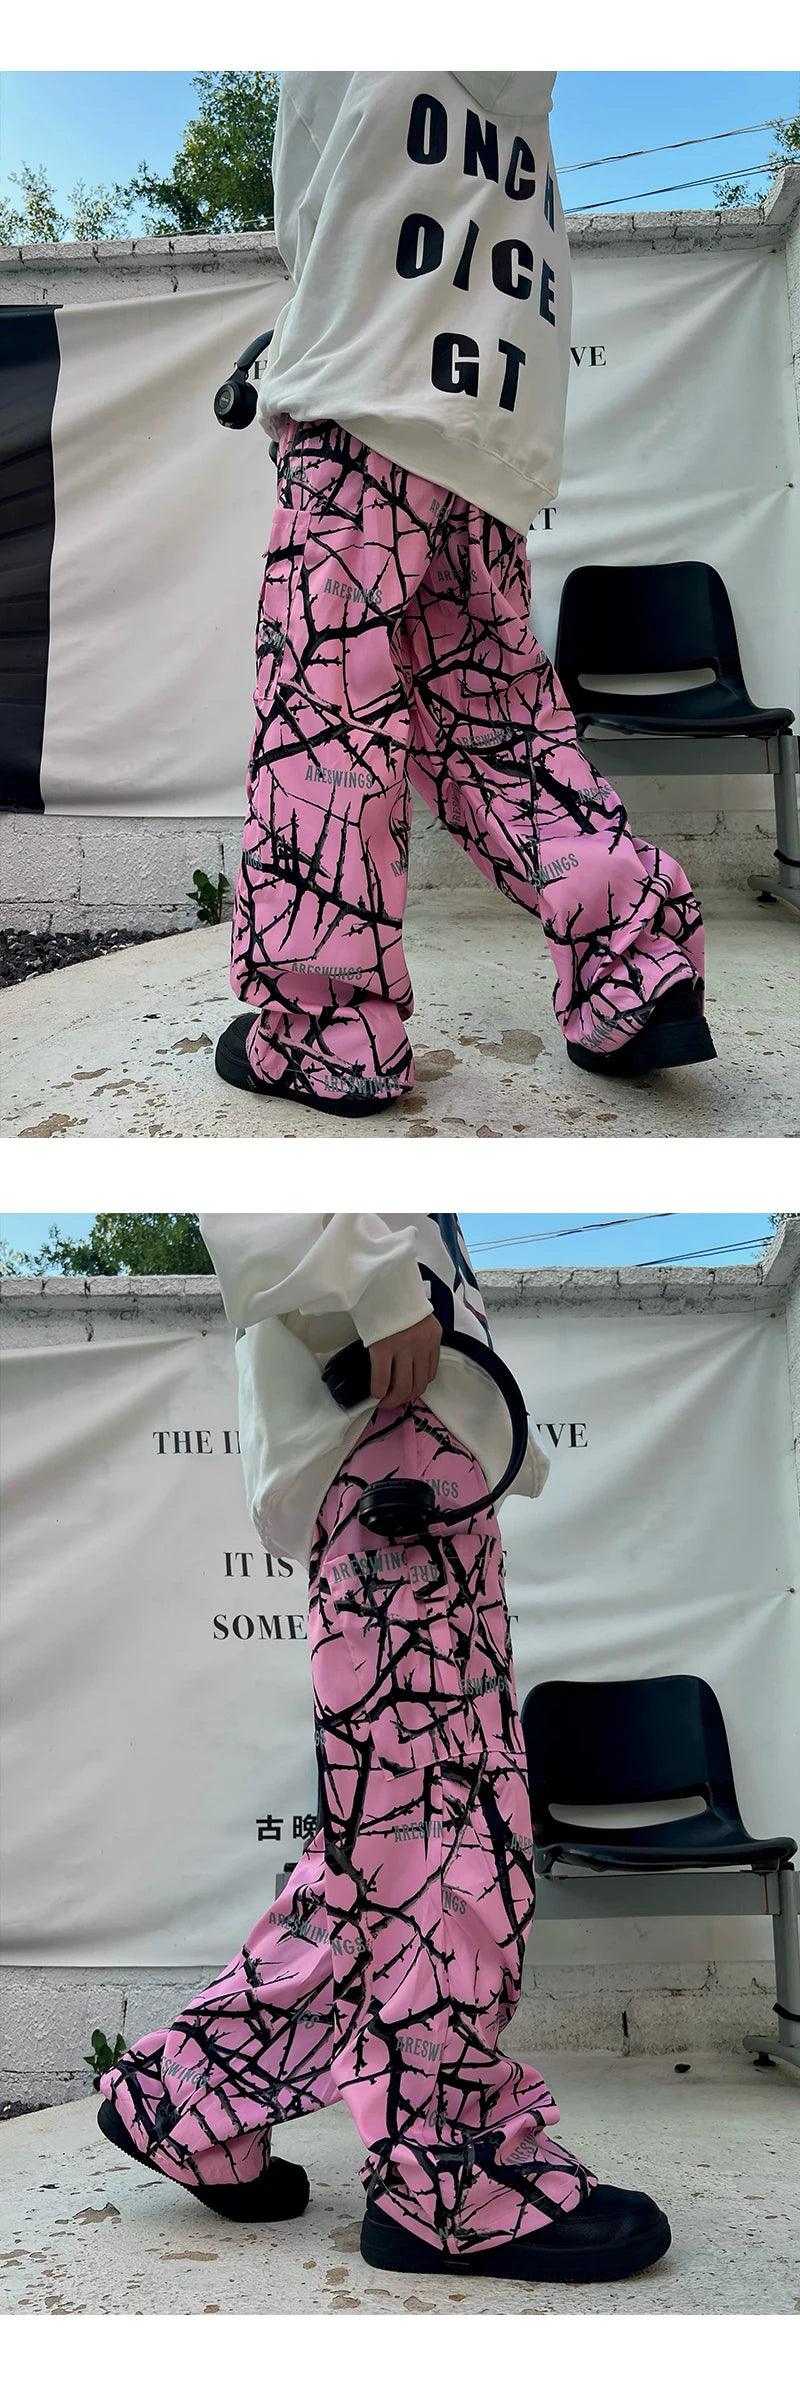 Pink Thorn Branch Printed Pants 318 - UncleDon JM